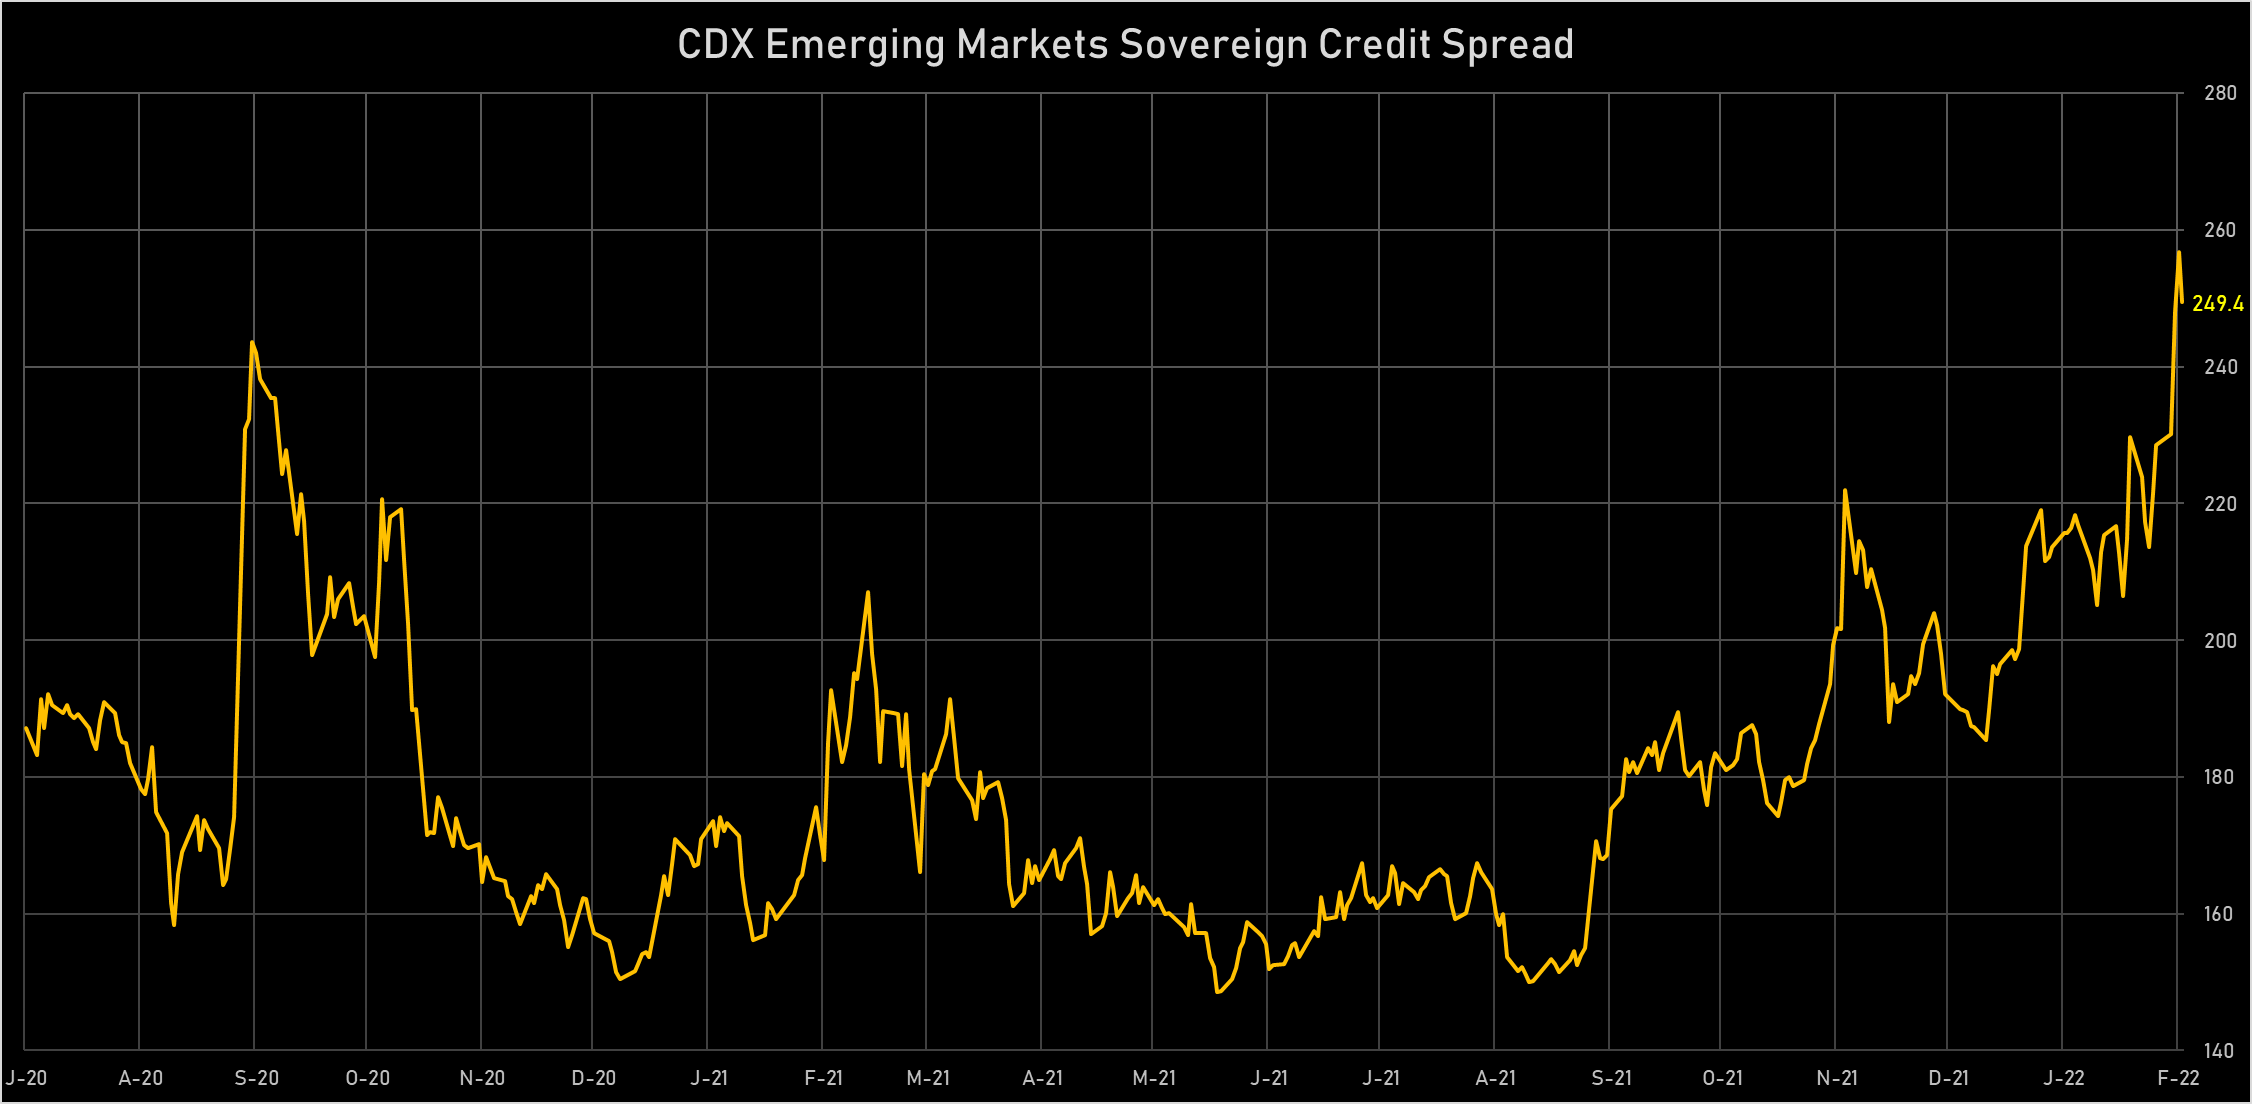 CDX EM Sovereign Credit Spread | SOurces: phipost.com, Refinitiv data